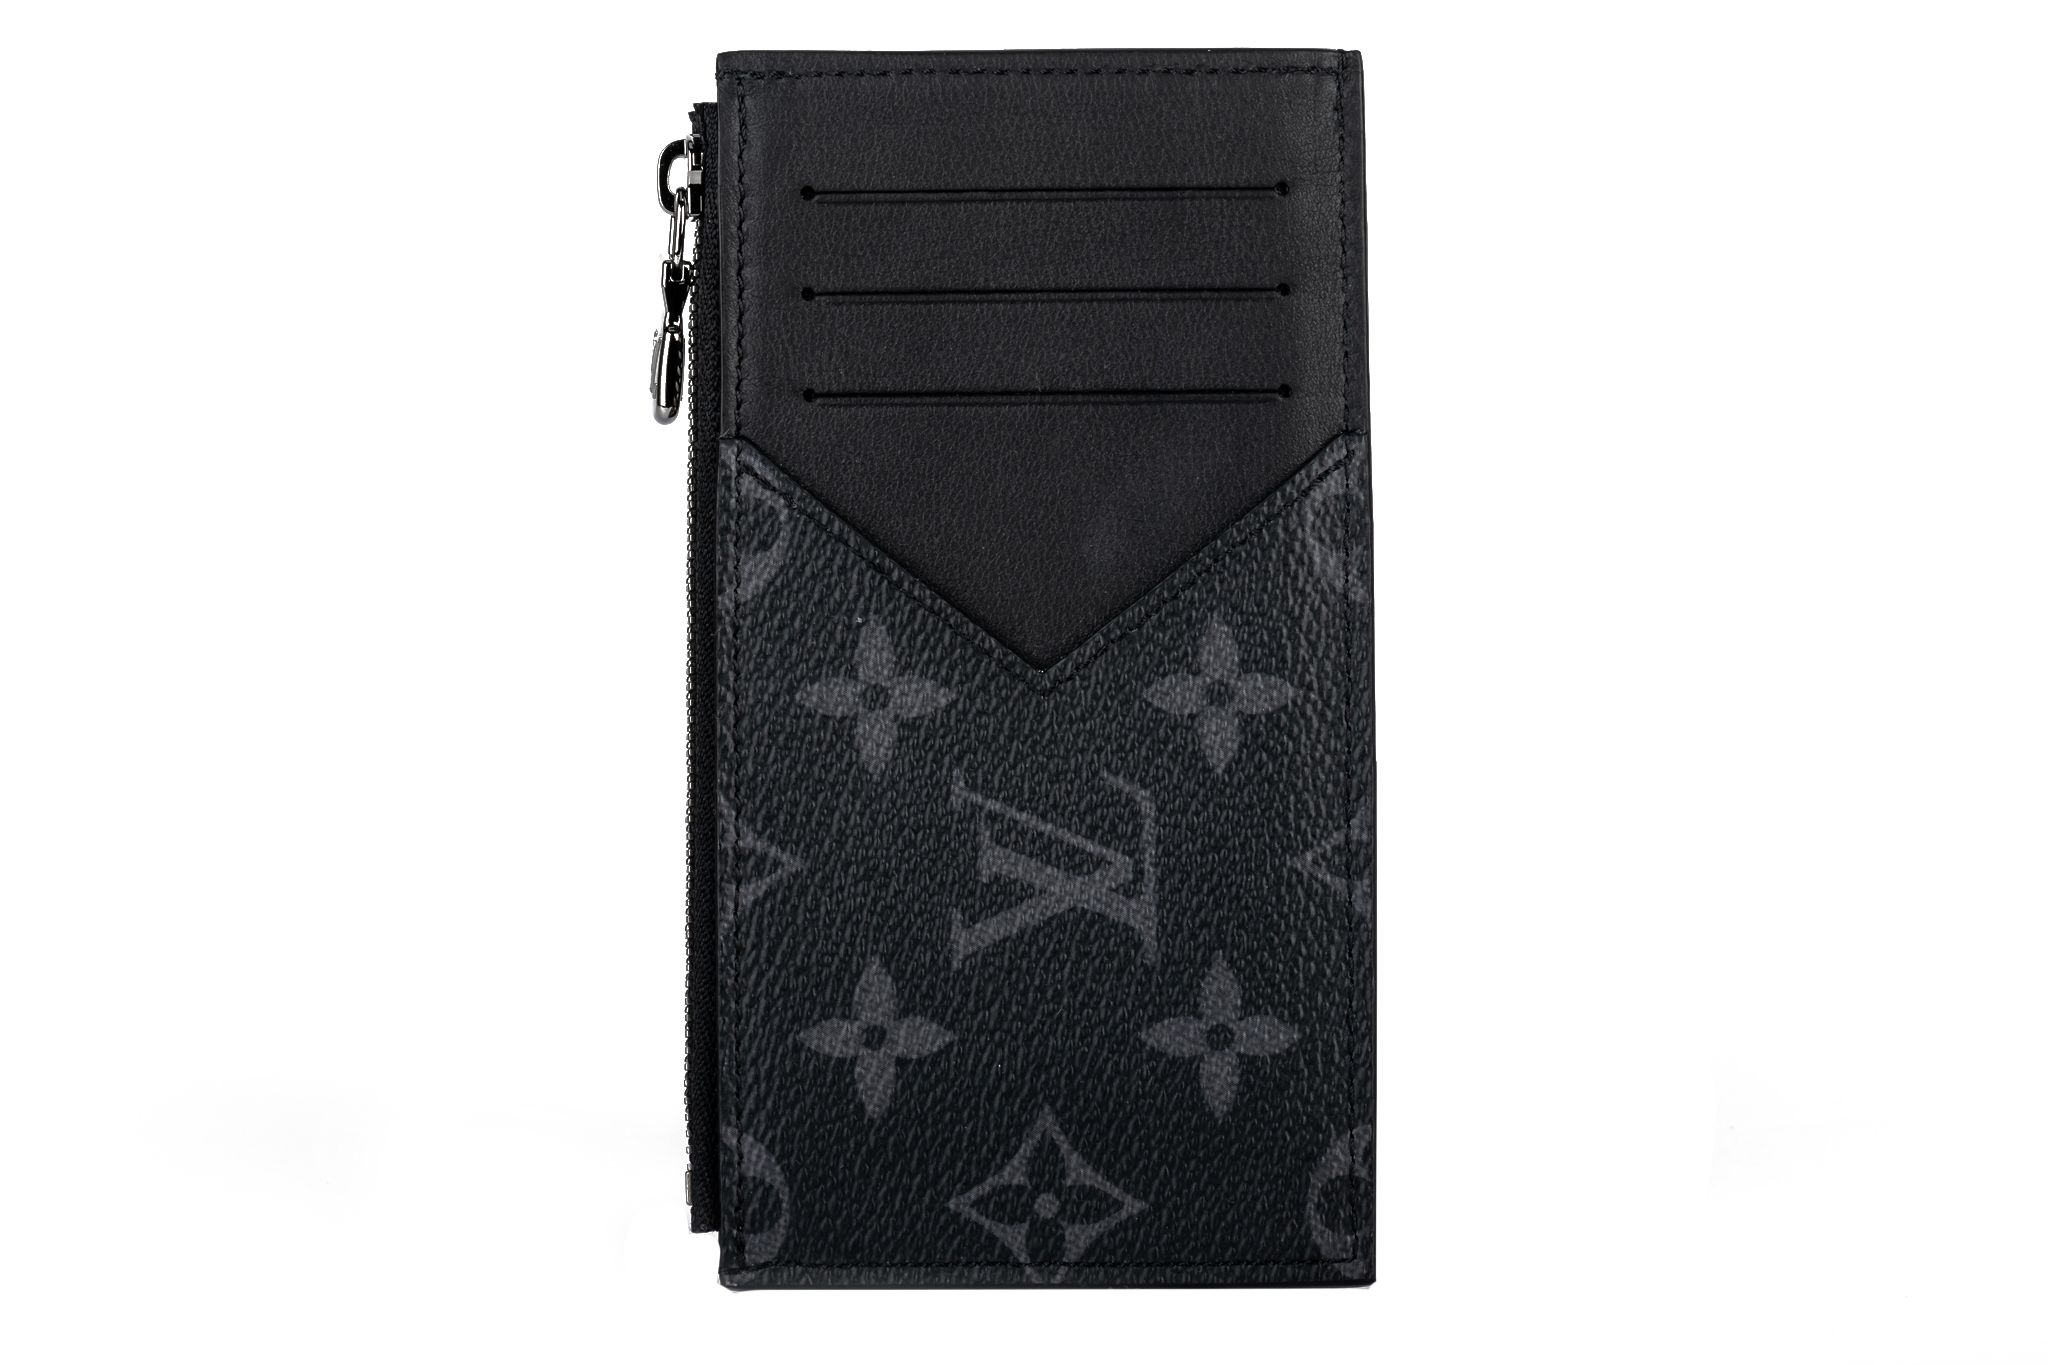 Reserved Louis Vuitton Reverse Monogram Card Case Holder